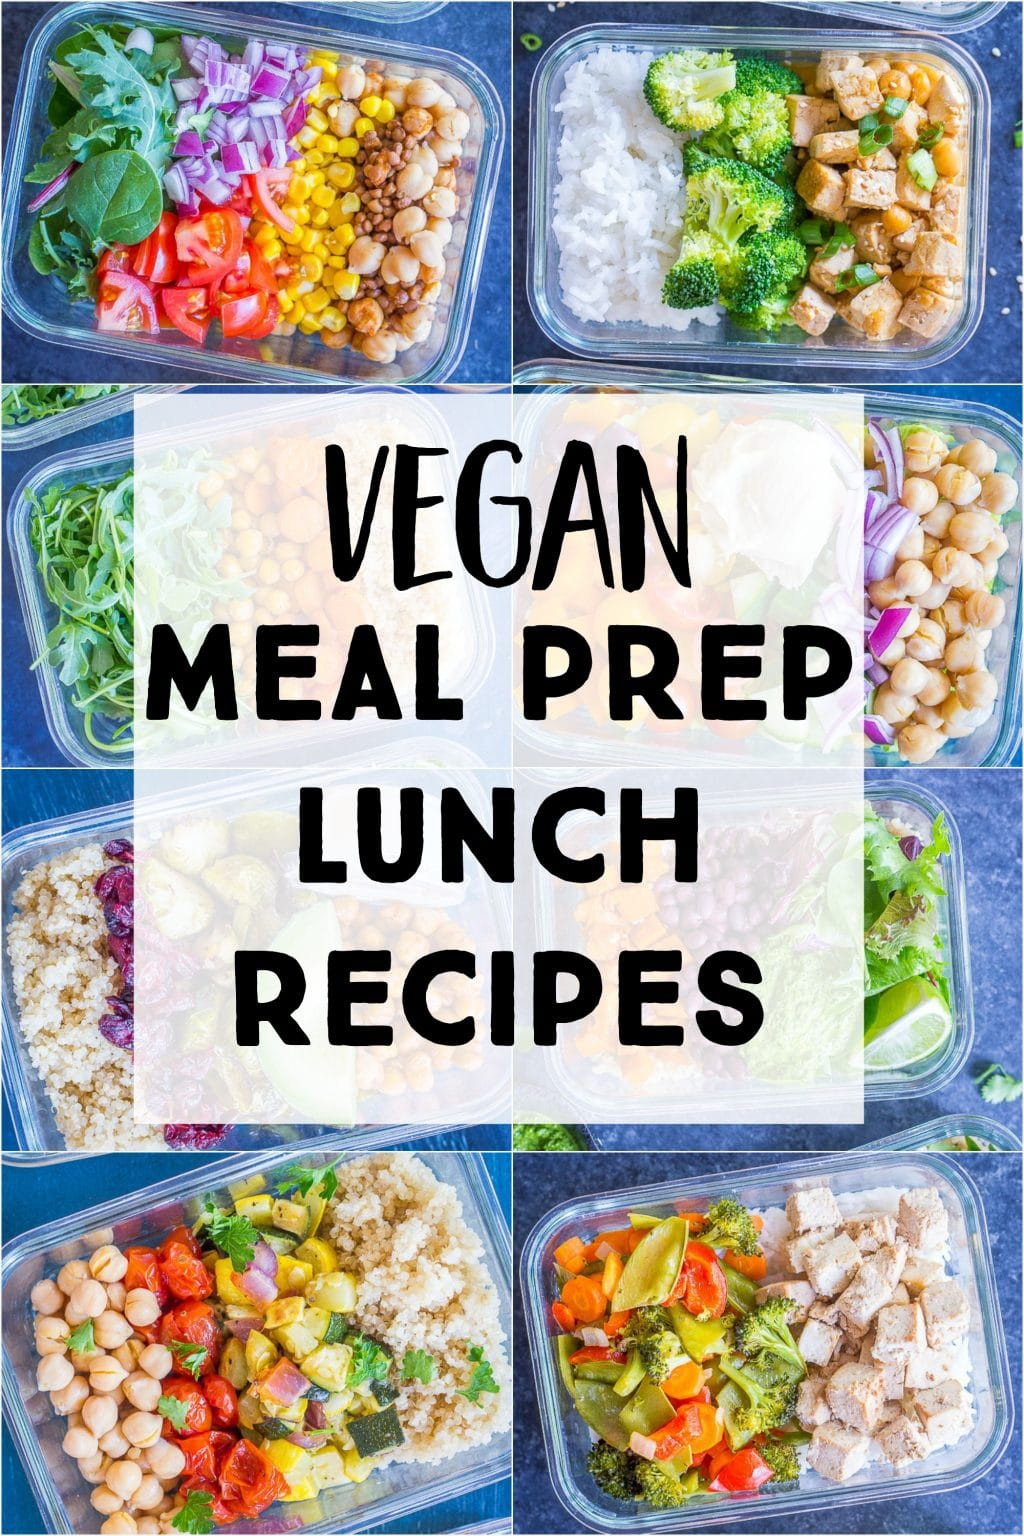 Vegetarian Meal Prep Recipes
 16 Vegan Meal Prep Recipes Lunch She Likes Food